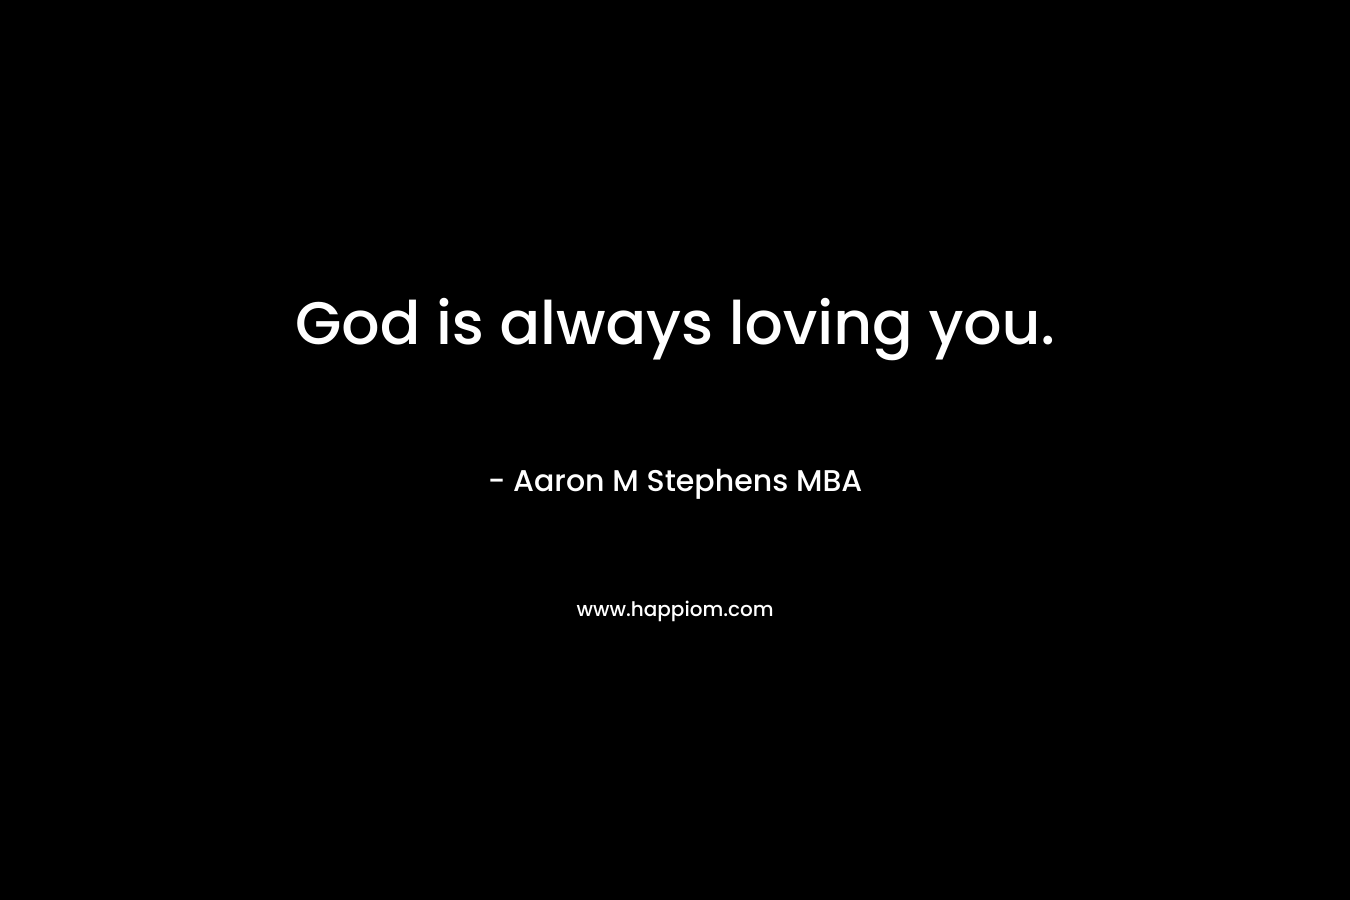 God is always loving you.